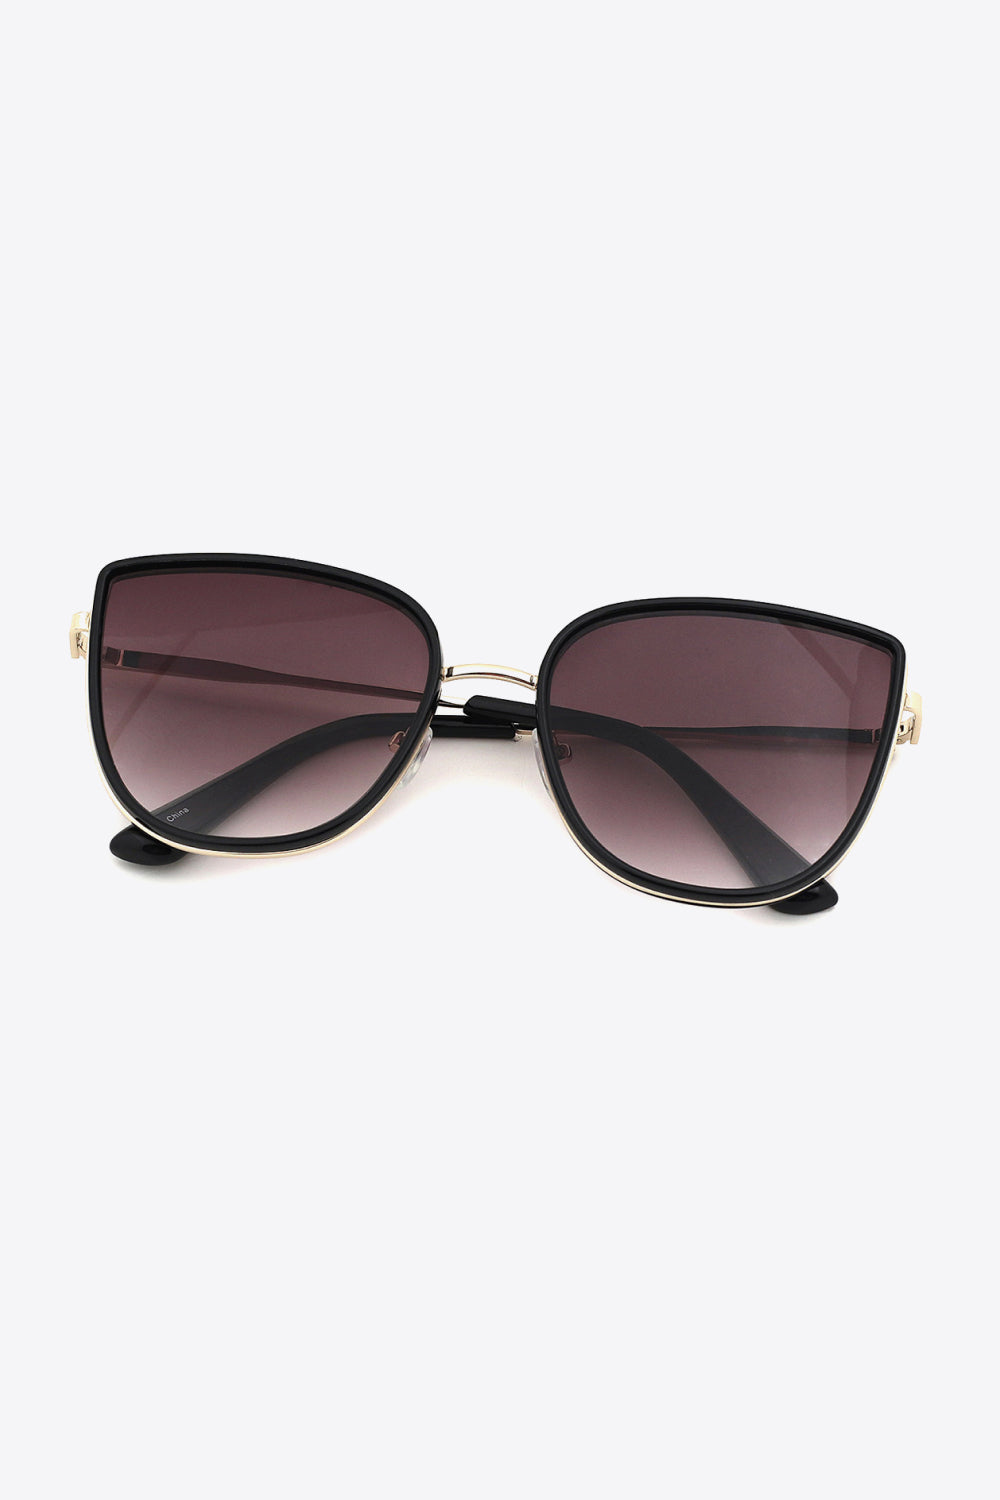 Uylee’s Boutique Full Rim Metal-Plastic Hybrid Frame Sunglasses